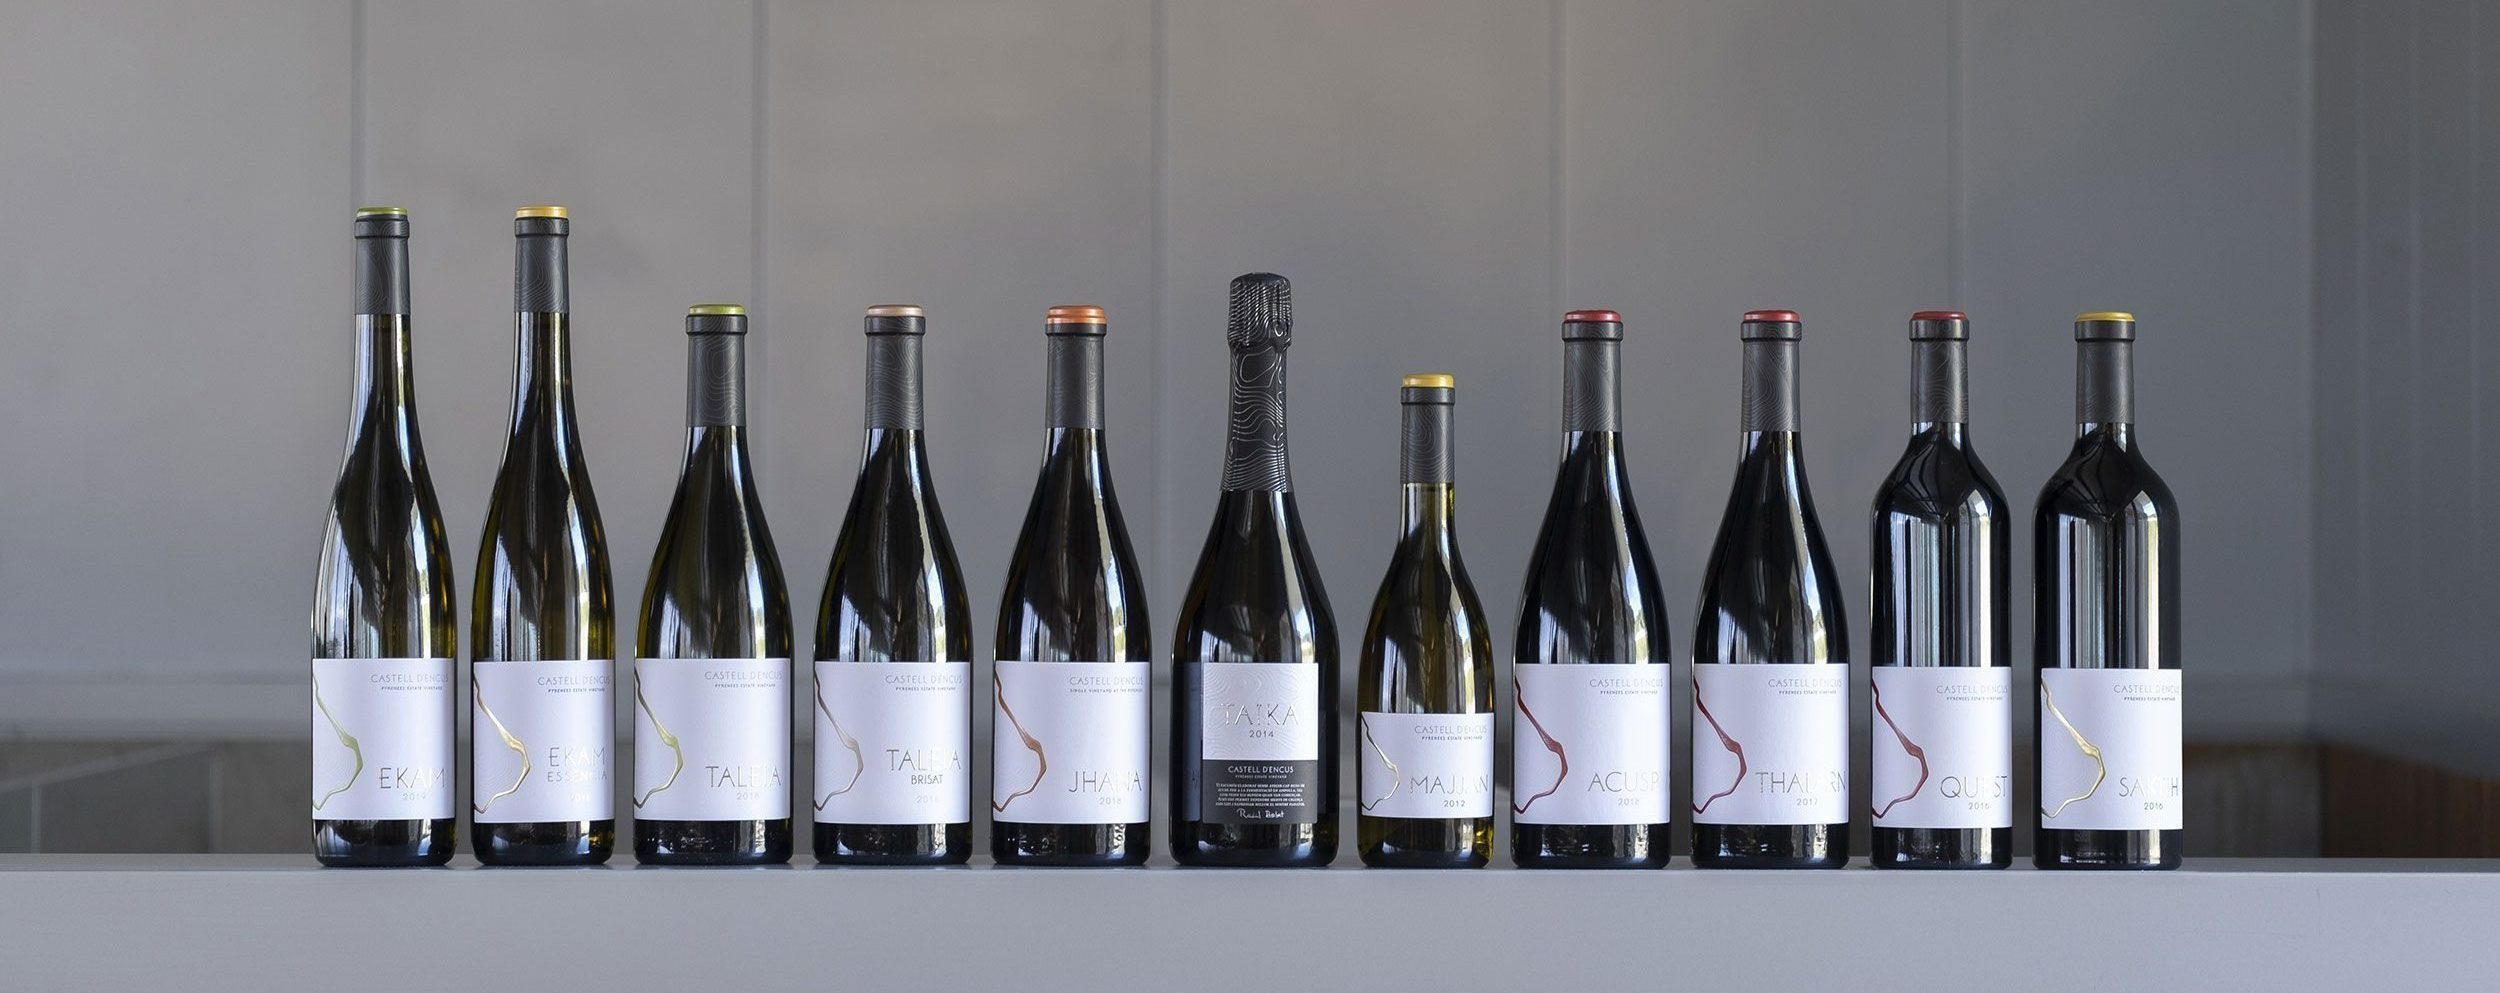 Botellas de todos los vinos de Castell d'Encus: Ekam, Ekam Essència, Taleia, Taleia Brisat, Jhana, Taika, Majjan, Acusp,Thalarn, Quest, Saktih